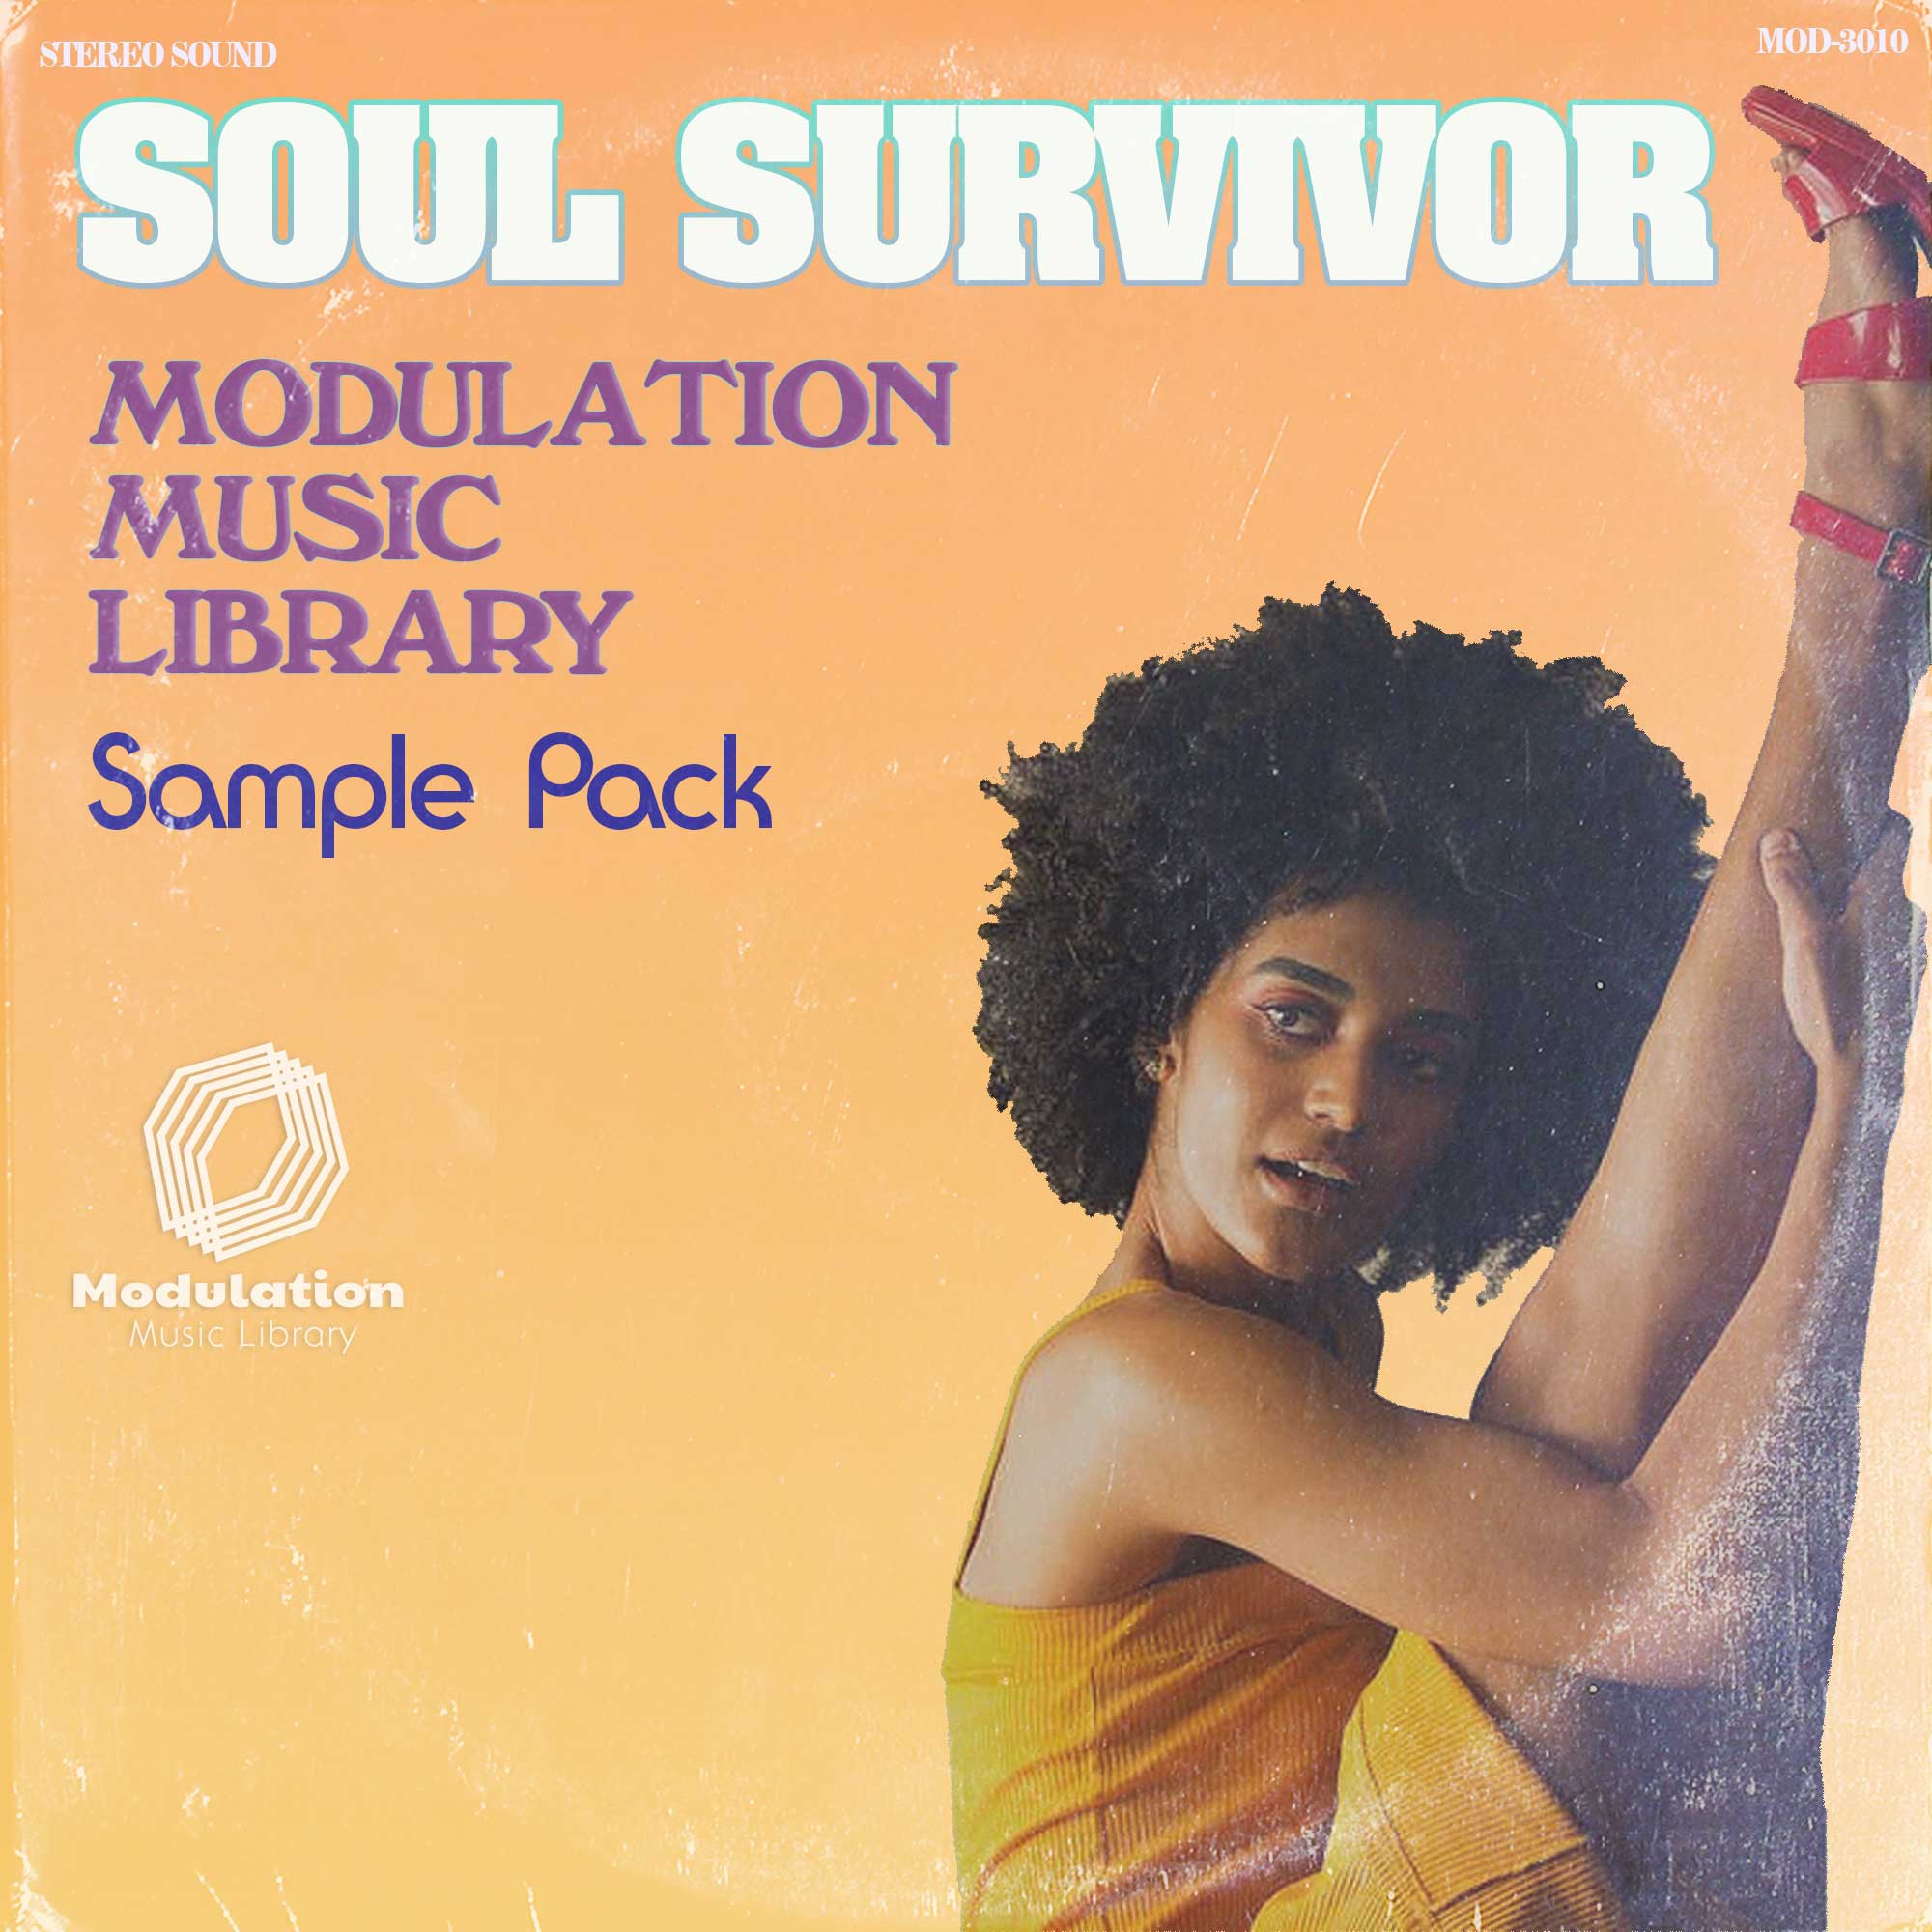 Soul Survivor - MOD-3010